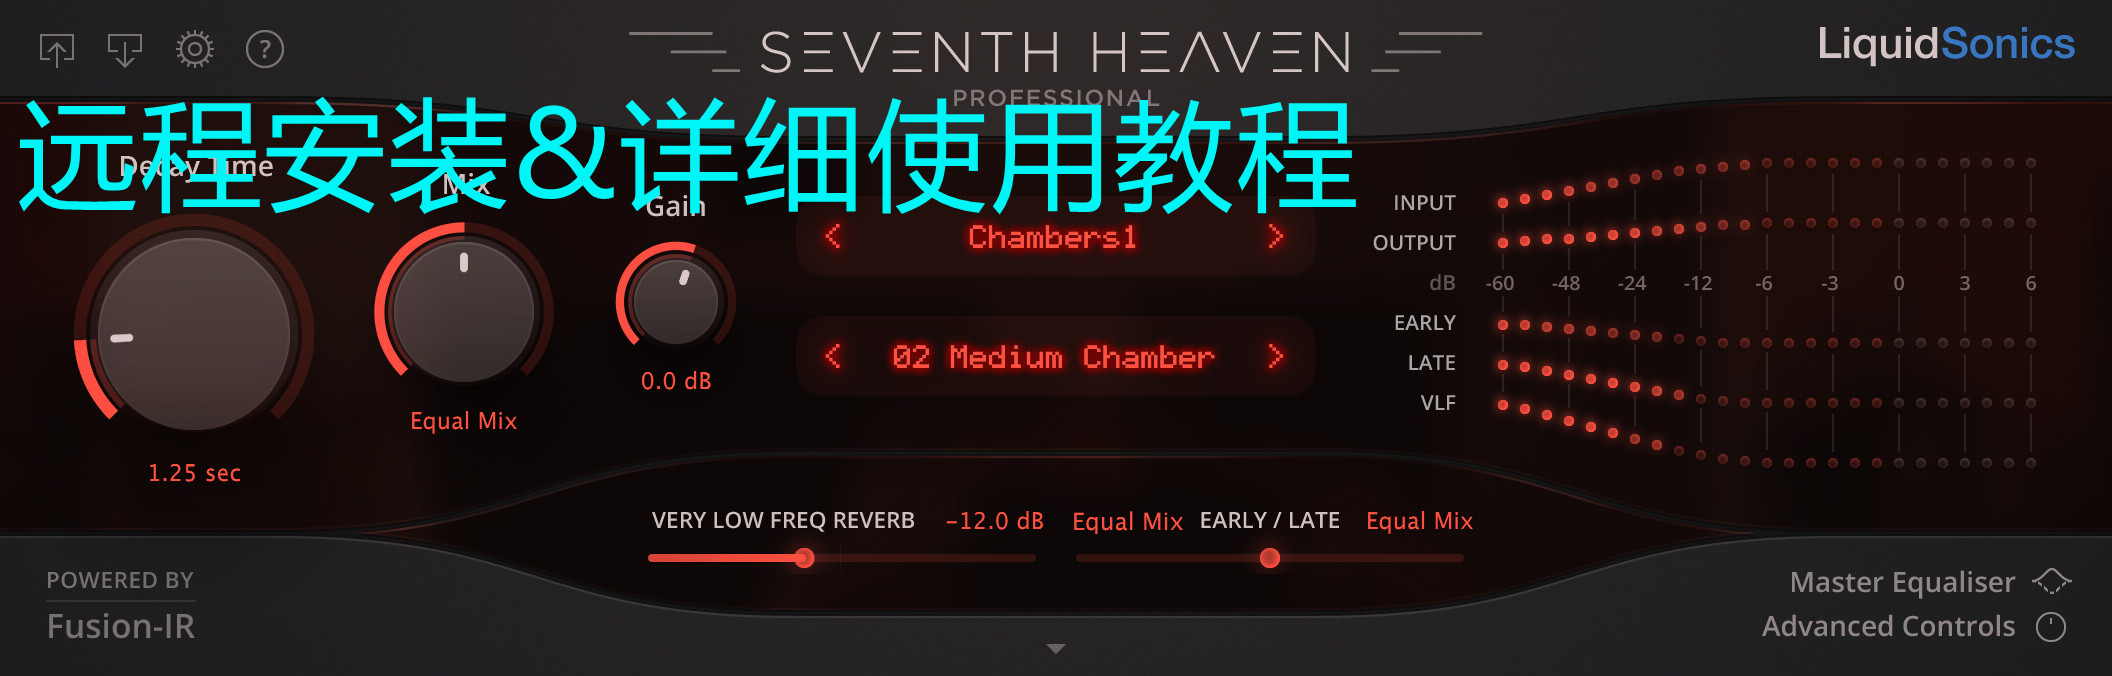 LiquidSonic seventh heaven Professional第七天堂混响PC版20G